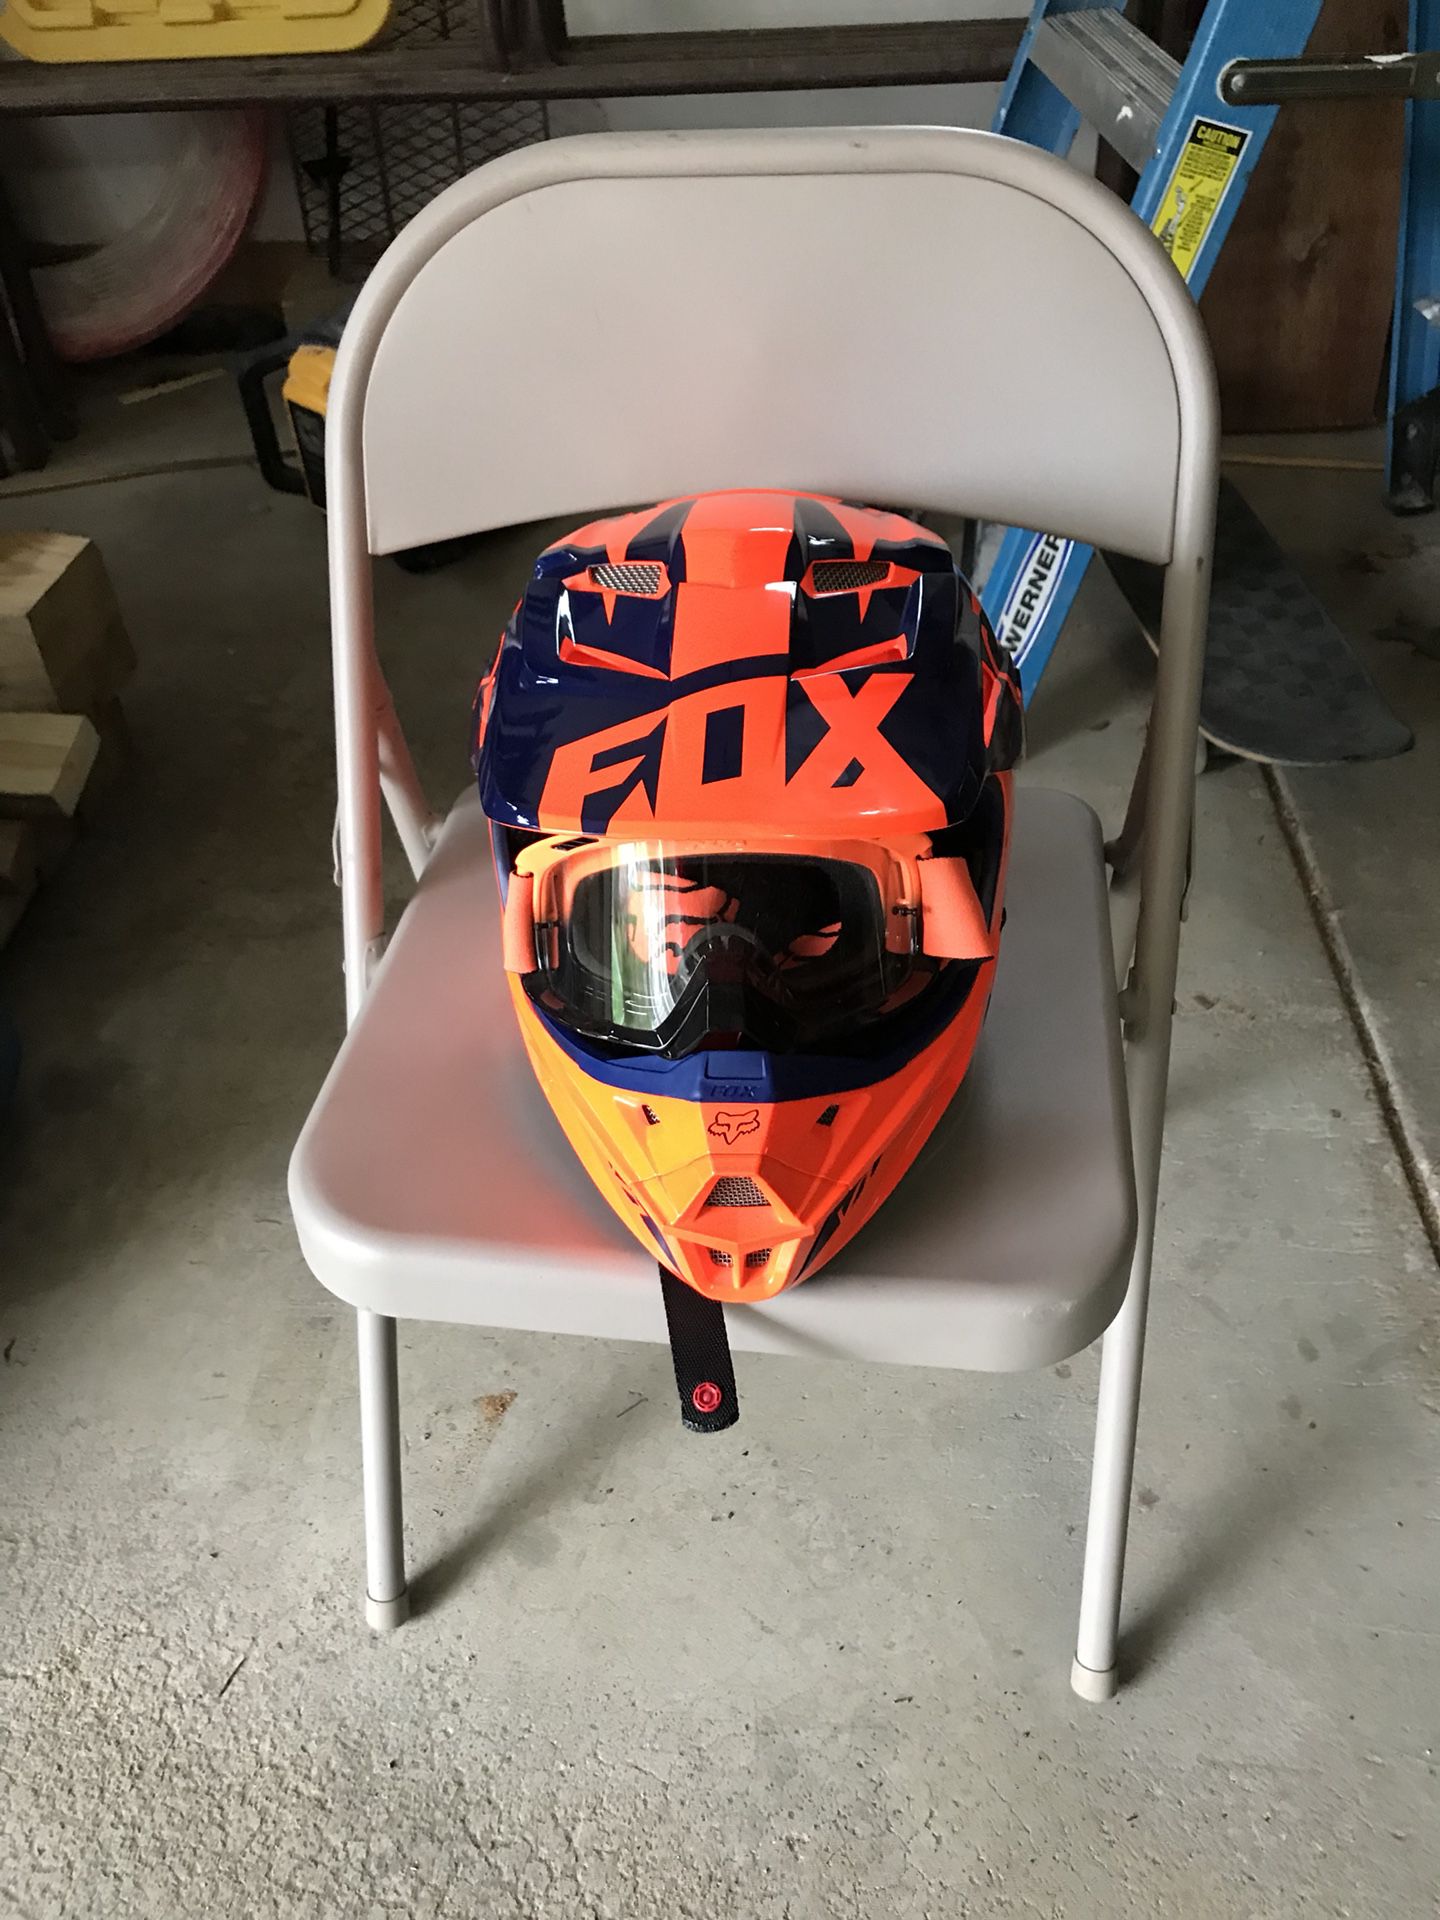 Brand new Fox Helmet and Fox Goggles